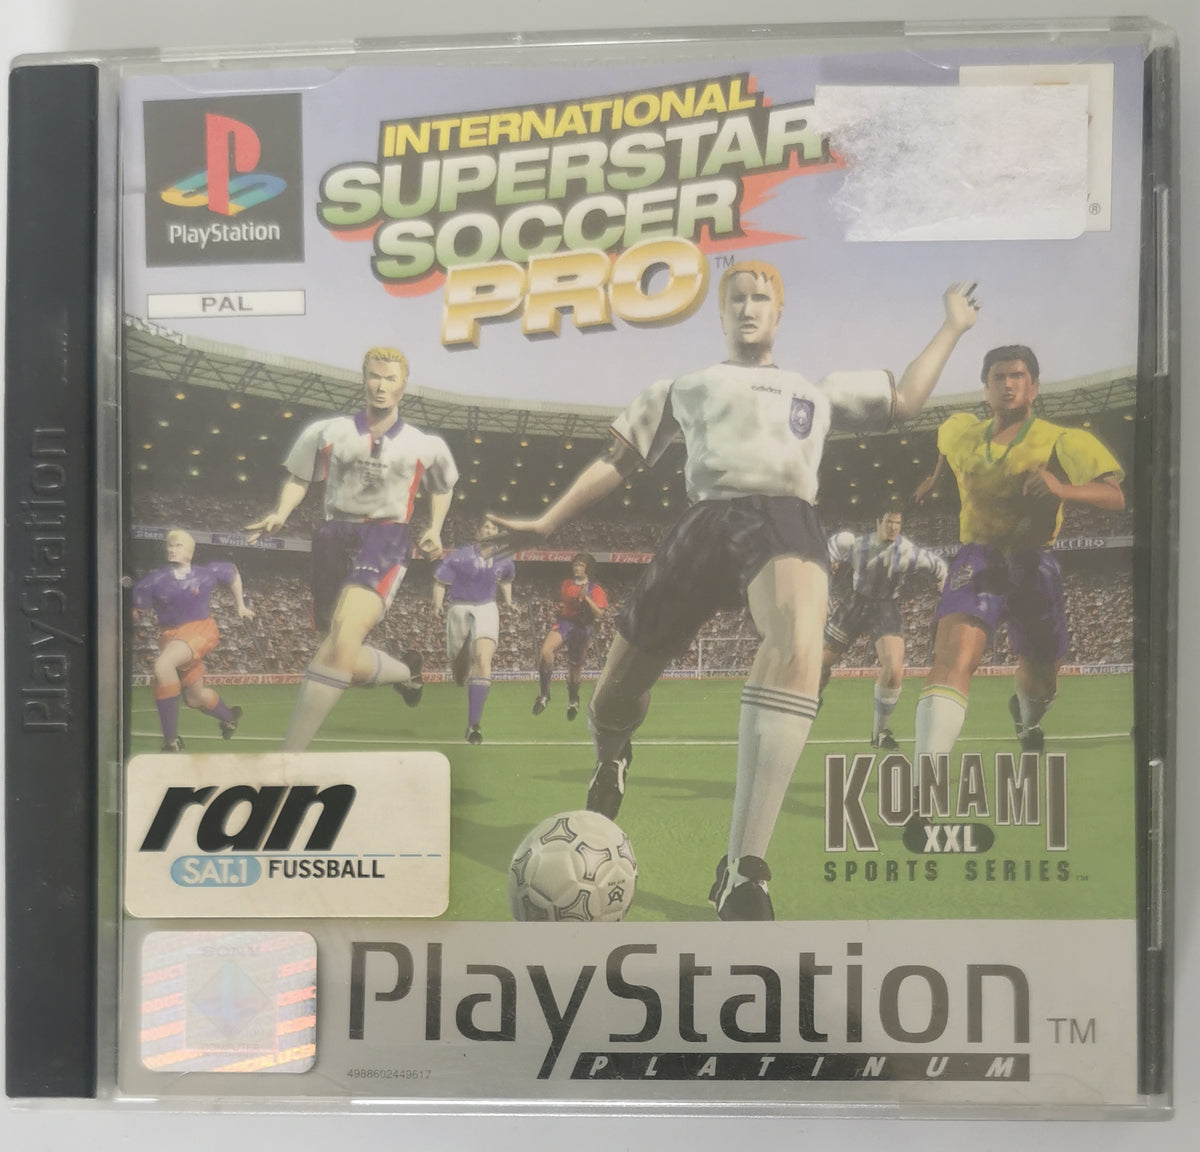 International Superstar Soccer Pro (Playstation 1) [Akzeptabel]